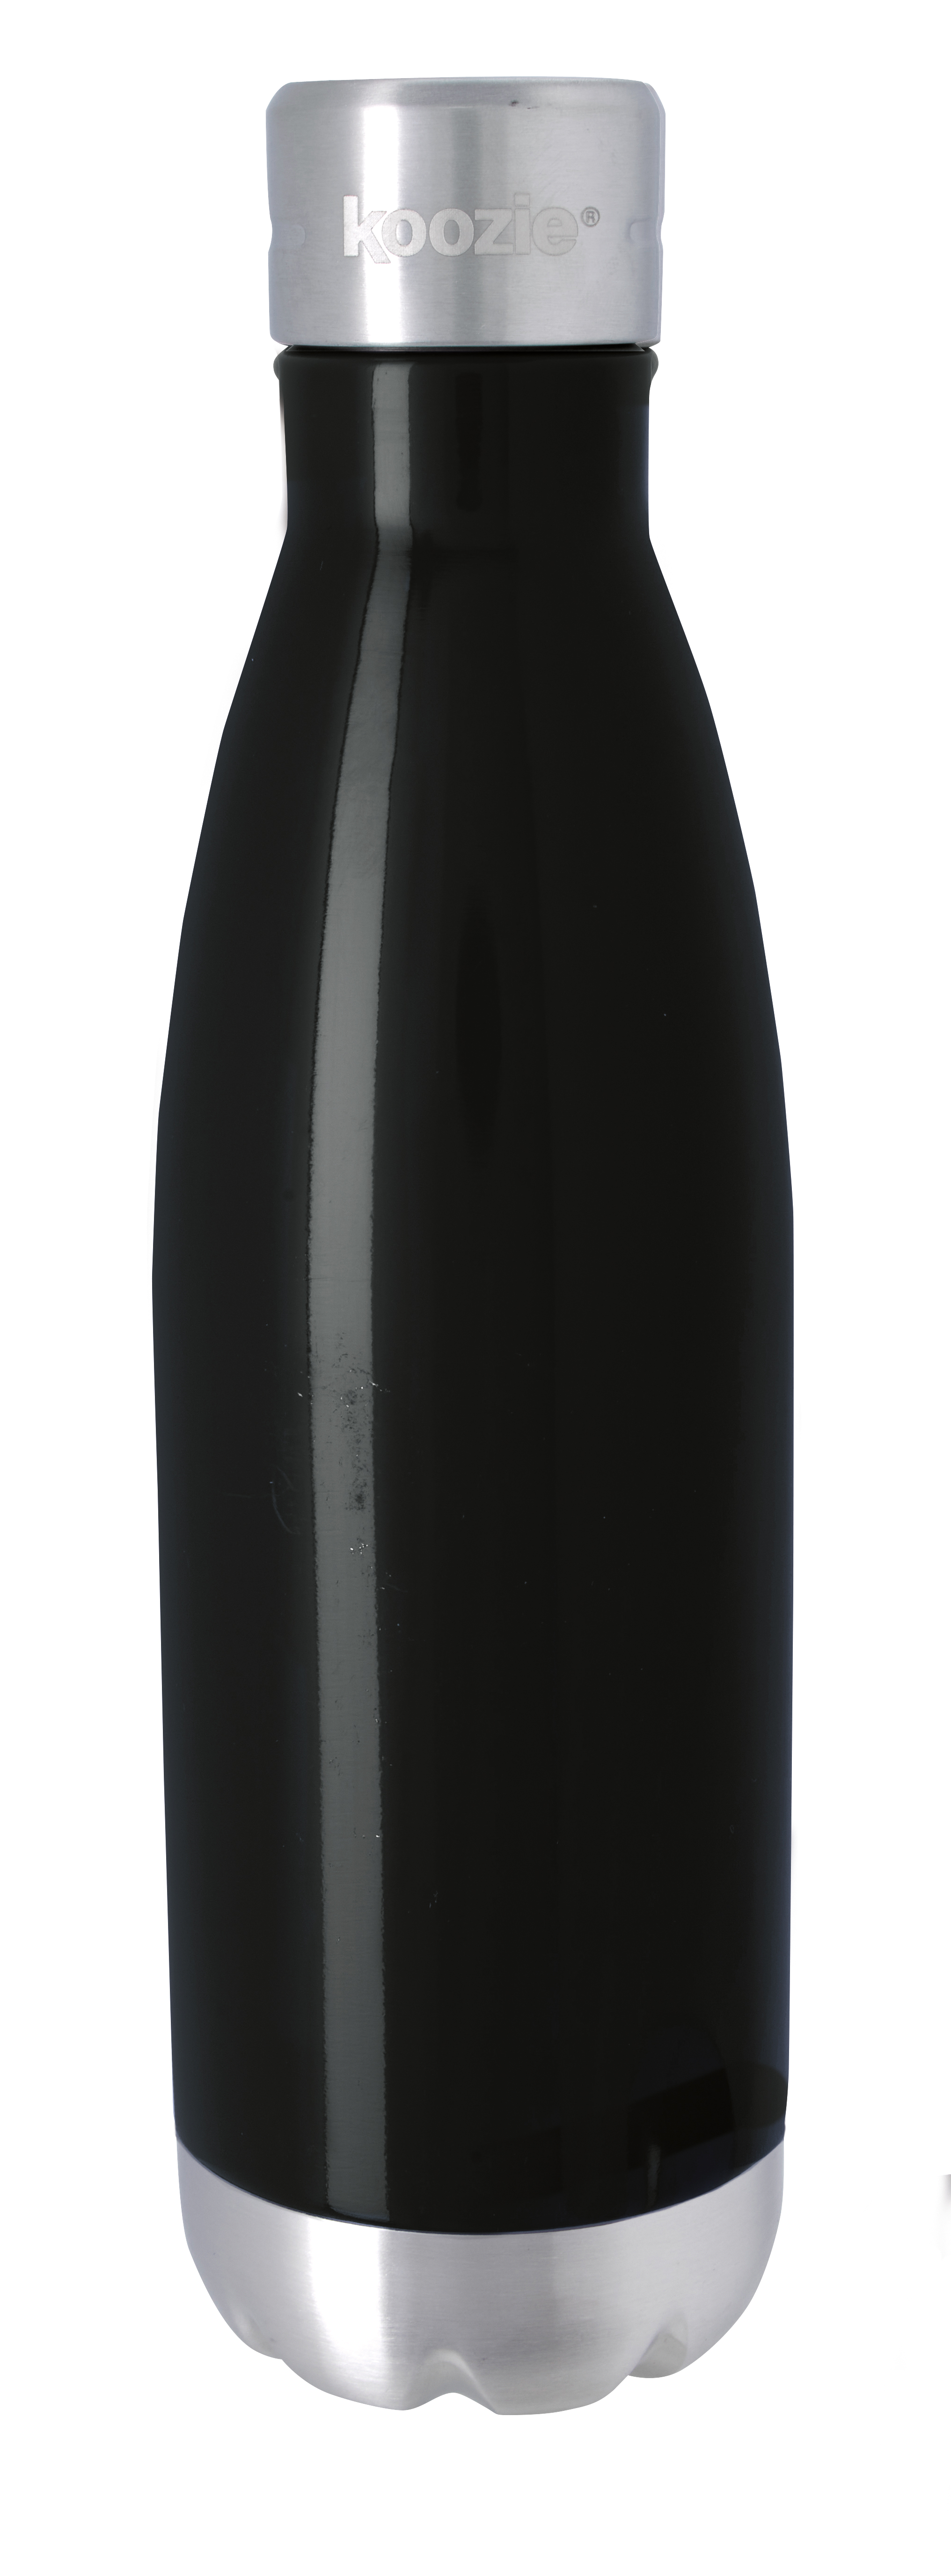 Koozie 46386 - Stainless Steel Bottle - 18 oz.